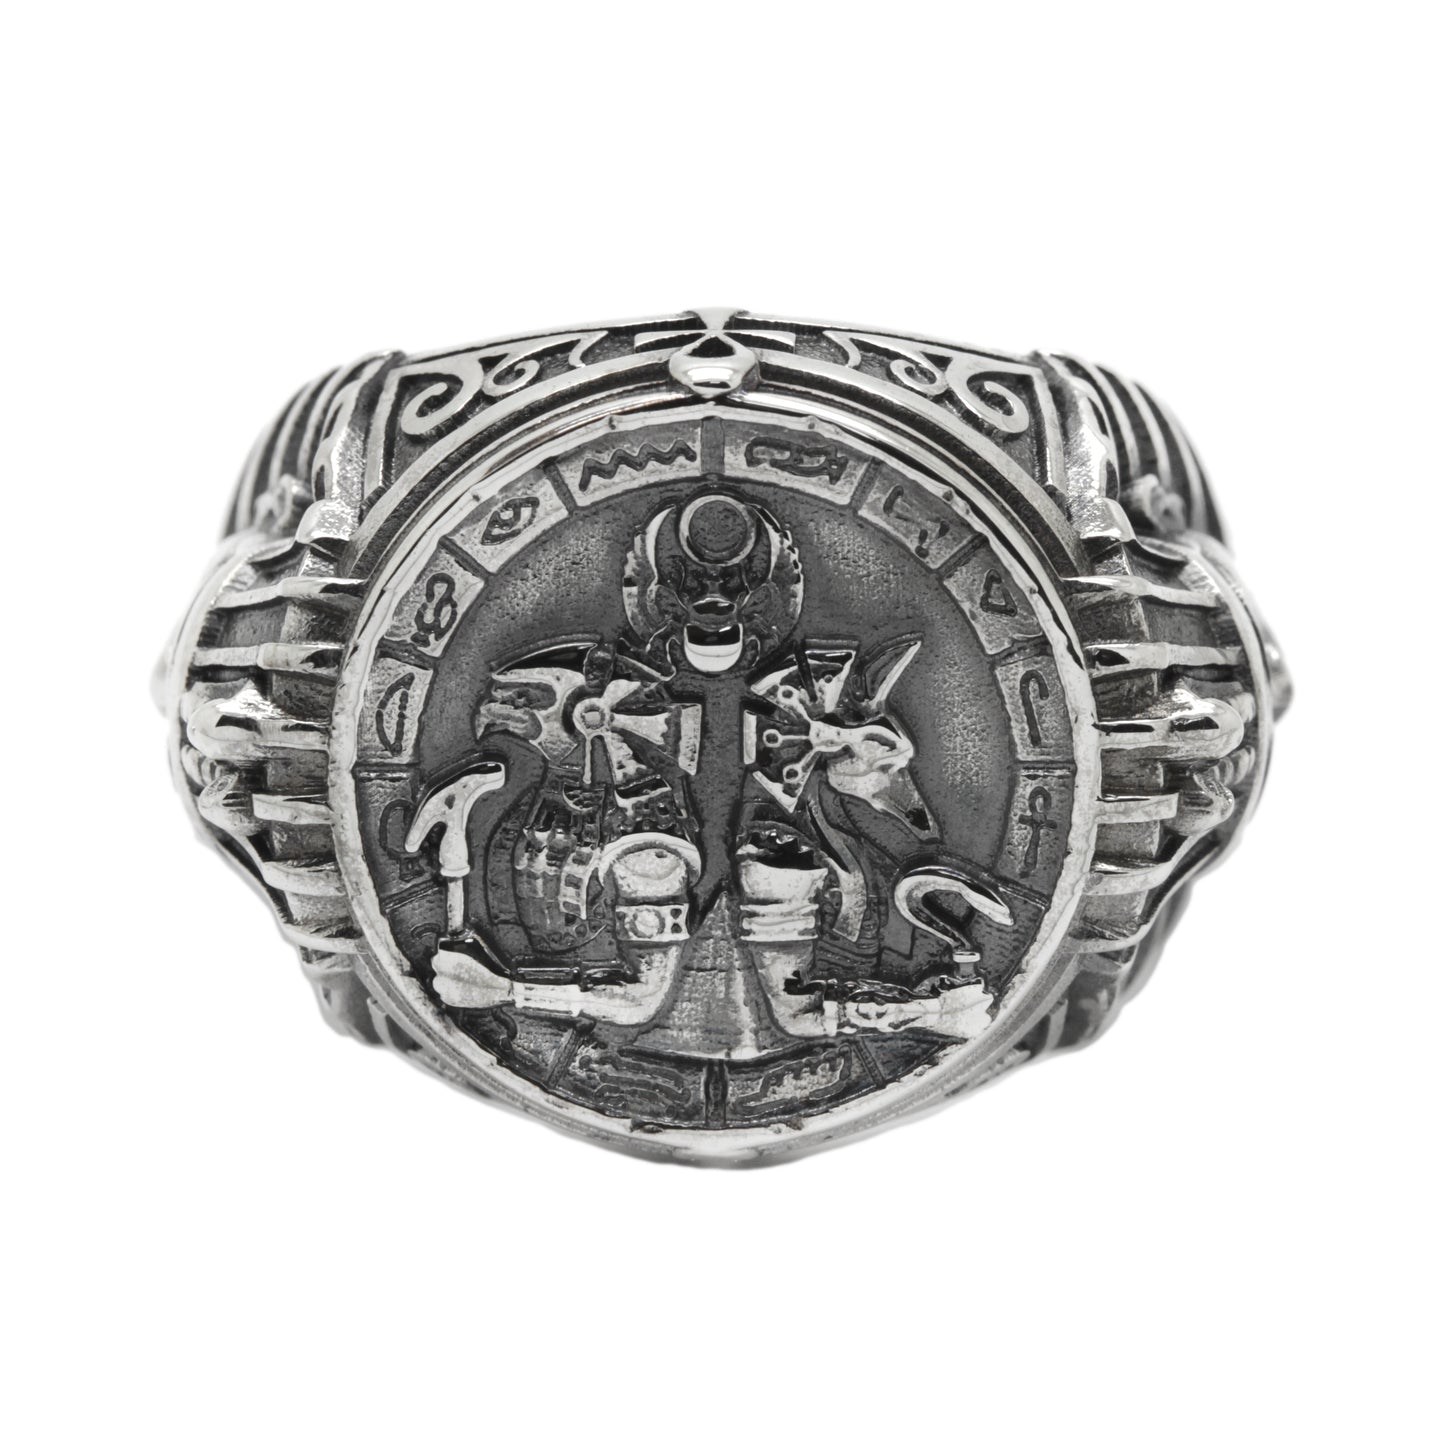 Gods of Egypt, A Huge Man Sterling Silver Ring Signet